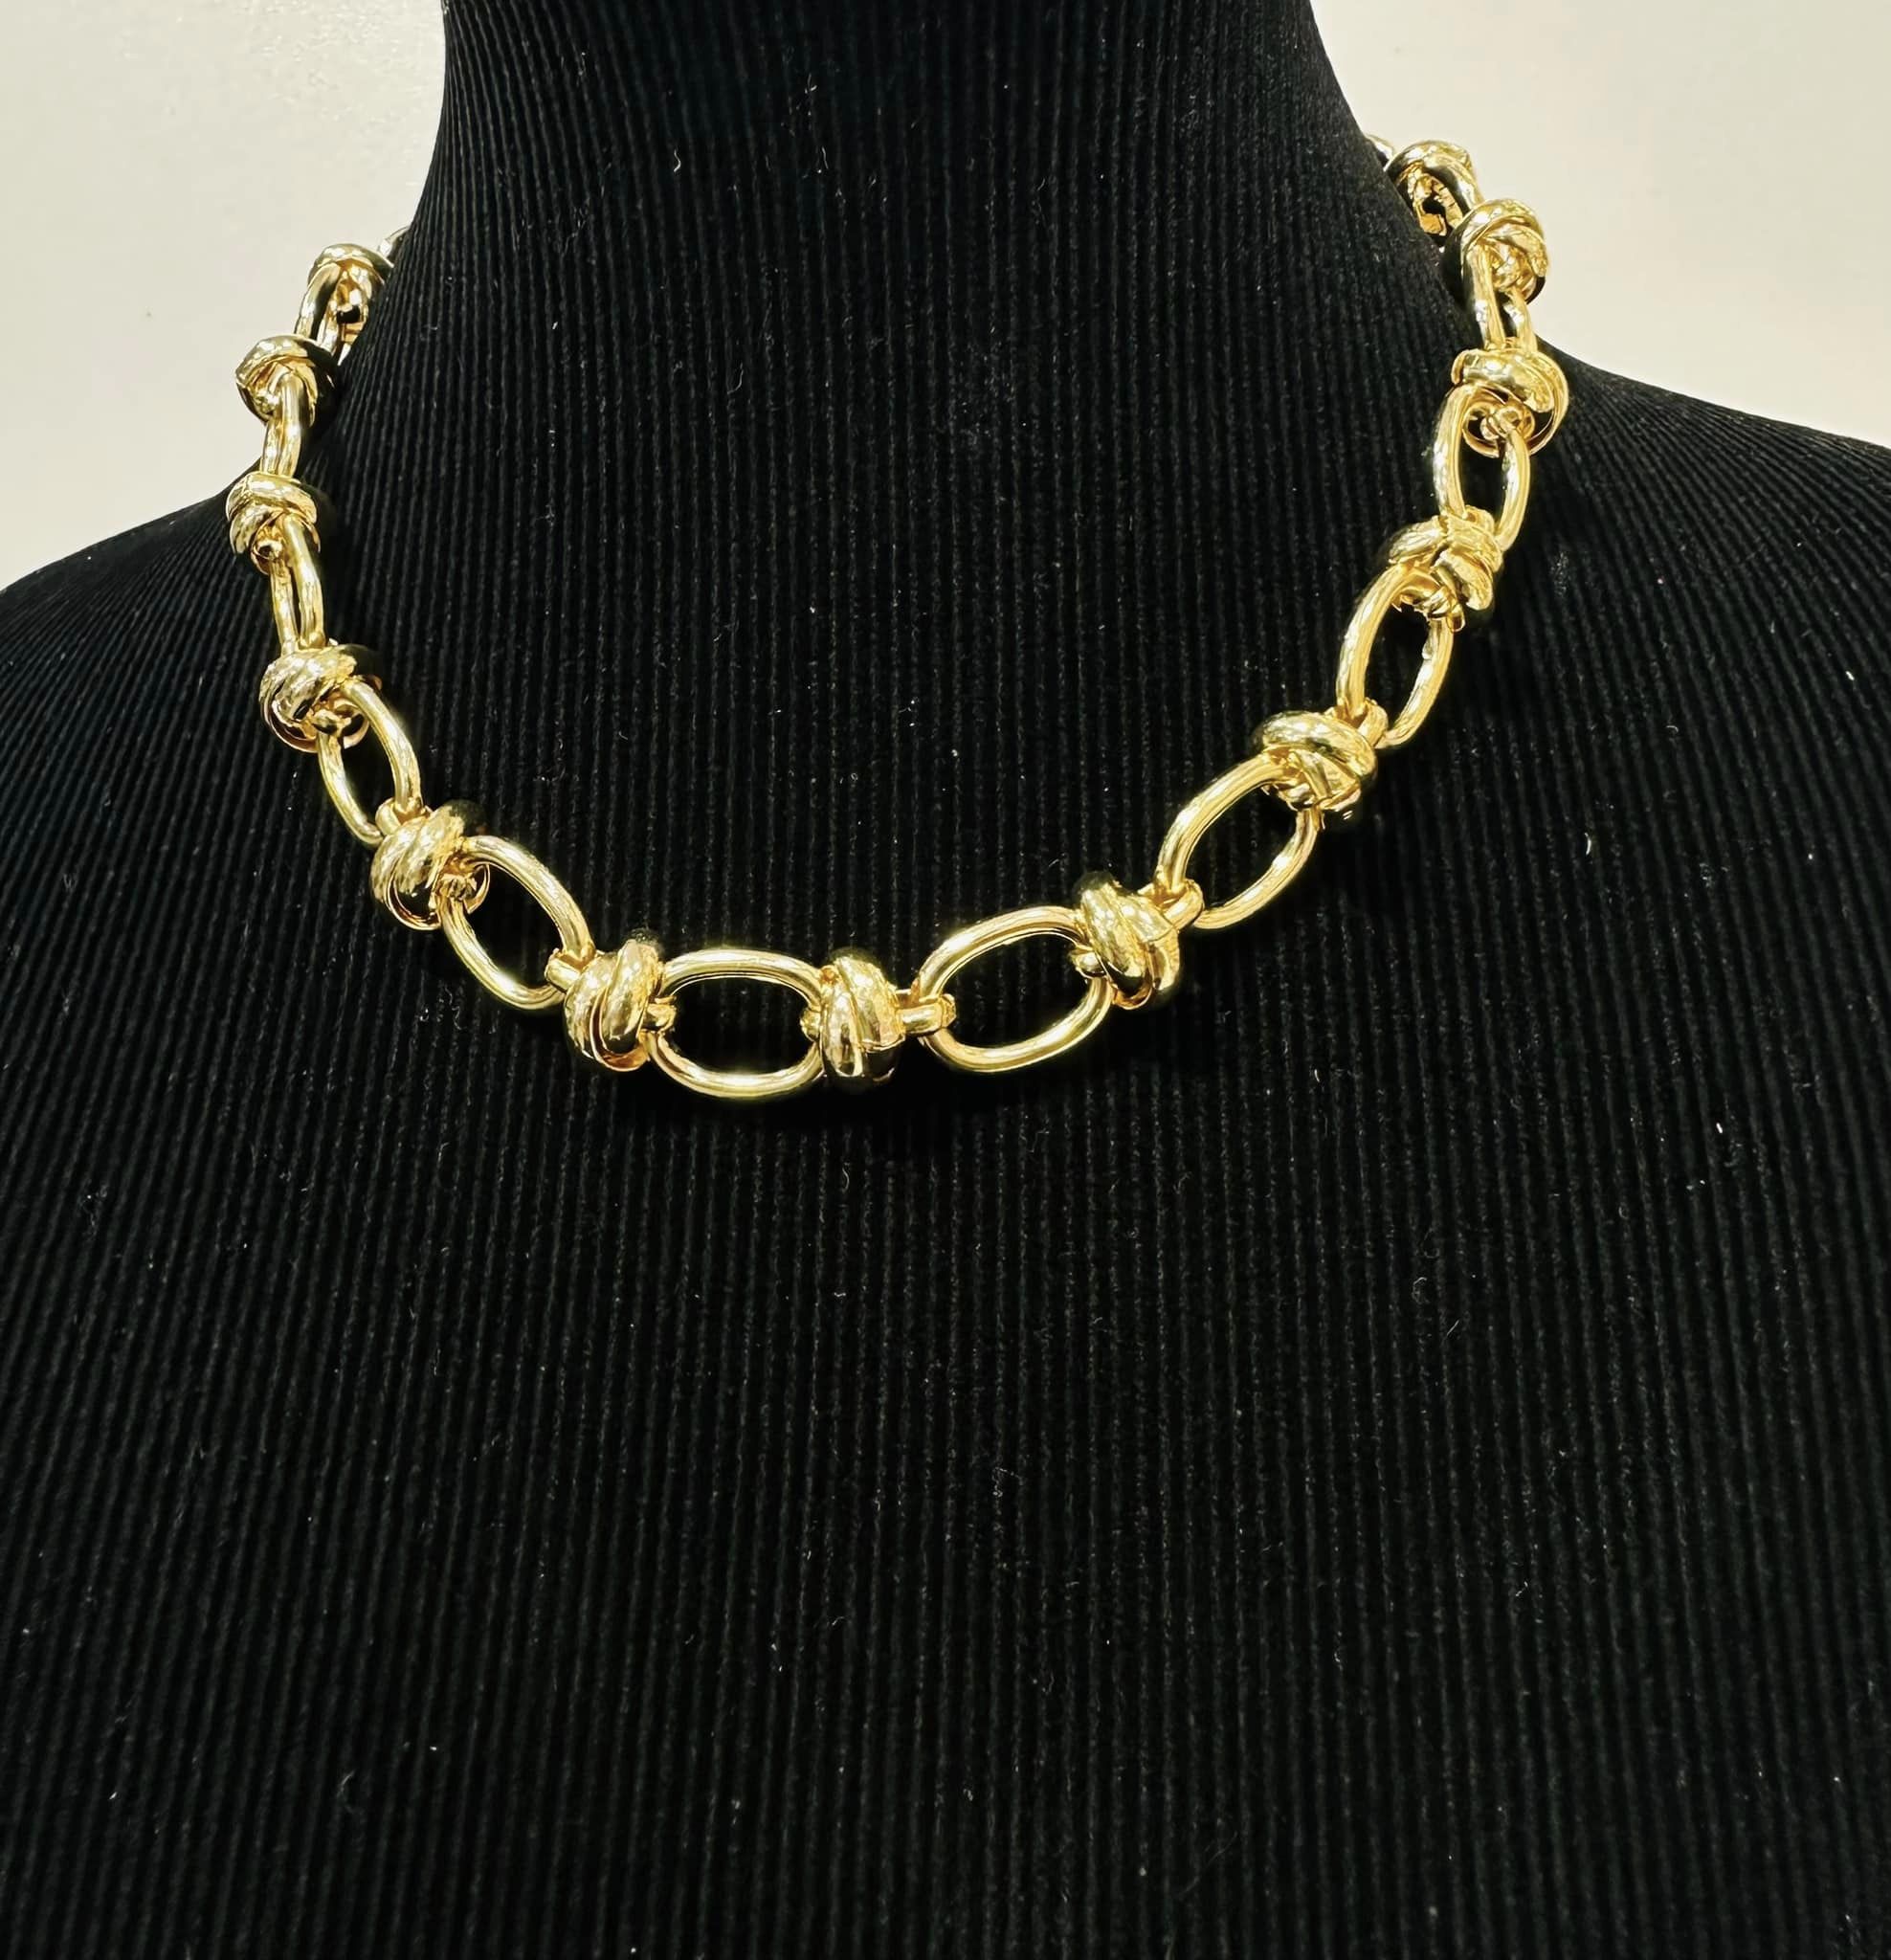 Golden chain necklaces